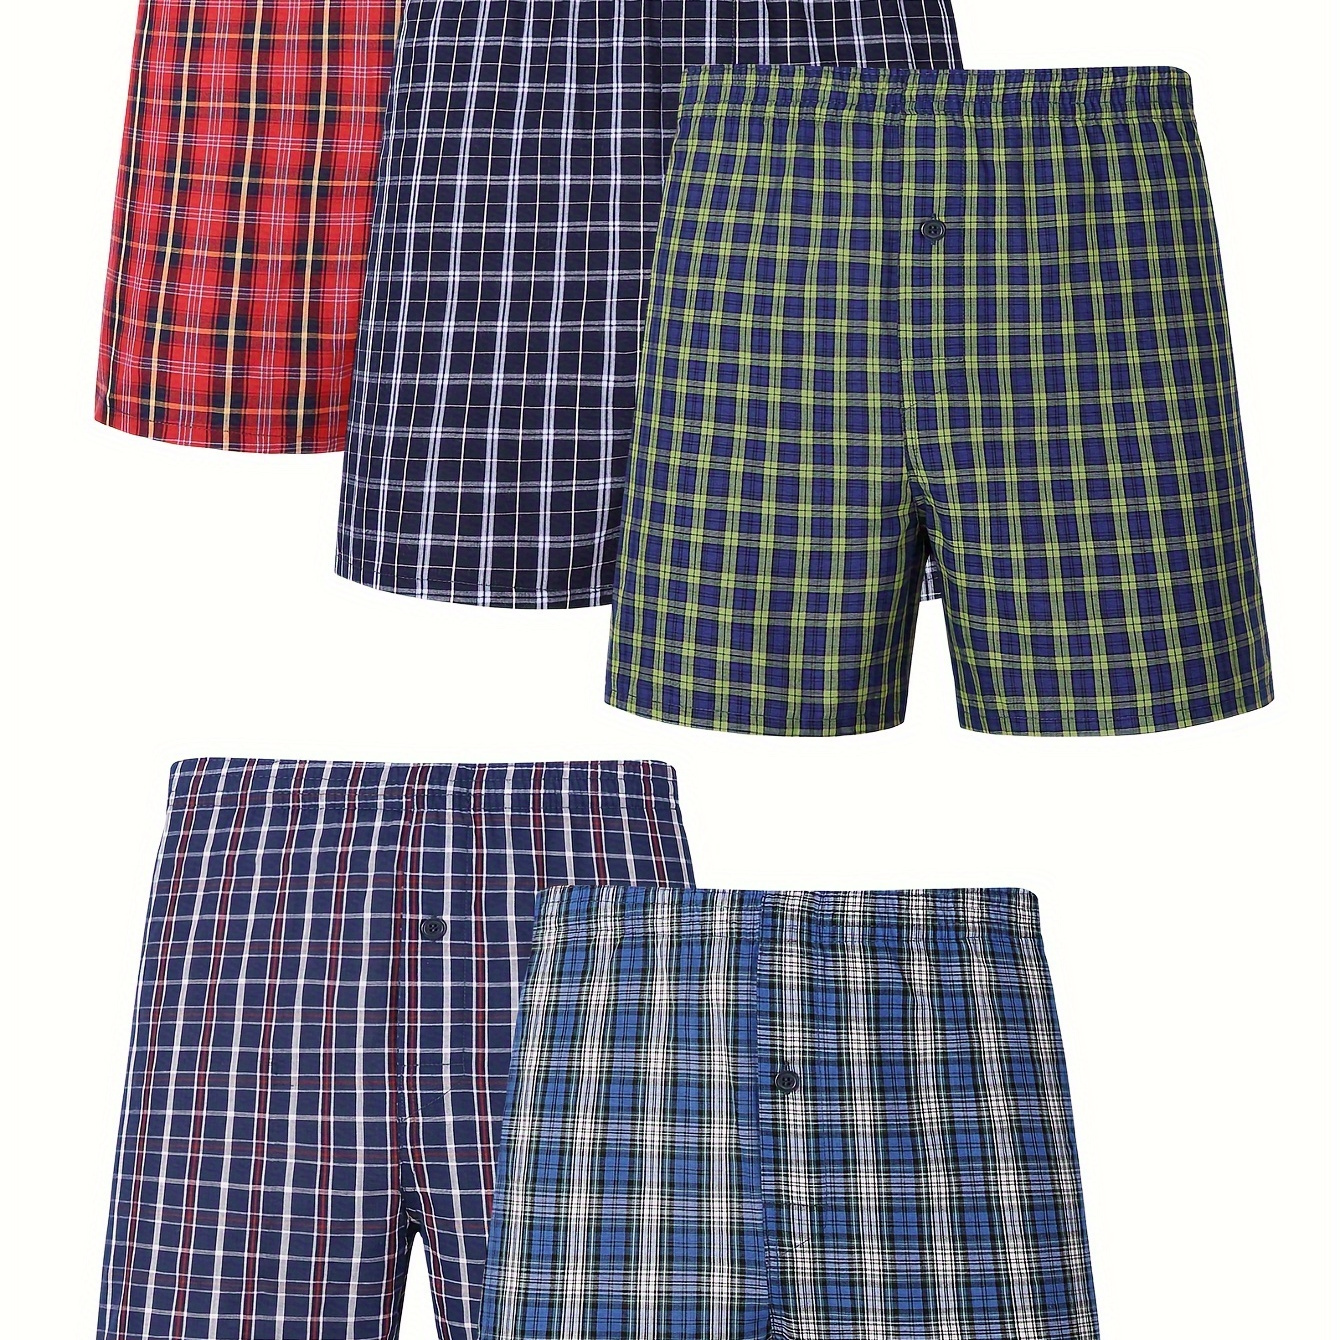 

5pcs Men's Plus Size Cotton Plaid Pattern Shorts, Comfy Stretchy Shorts, Big & Tall Male